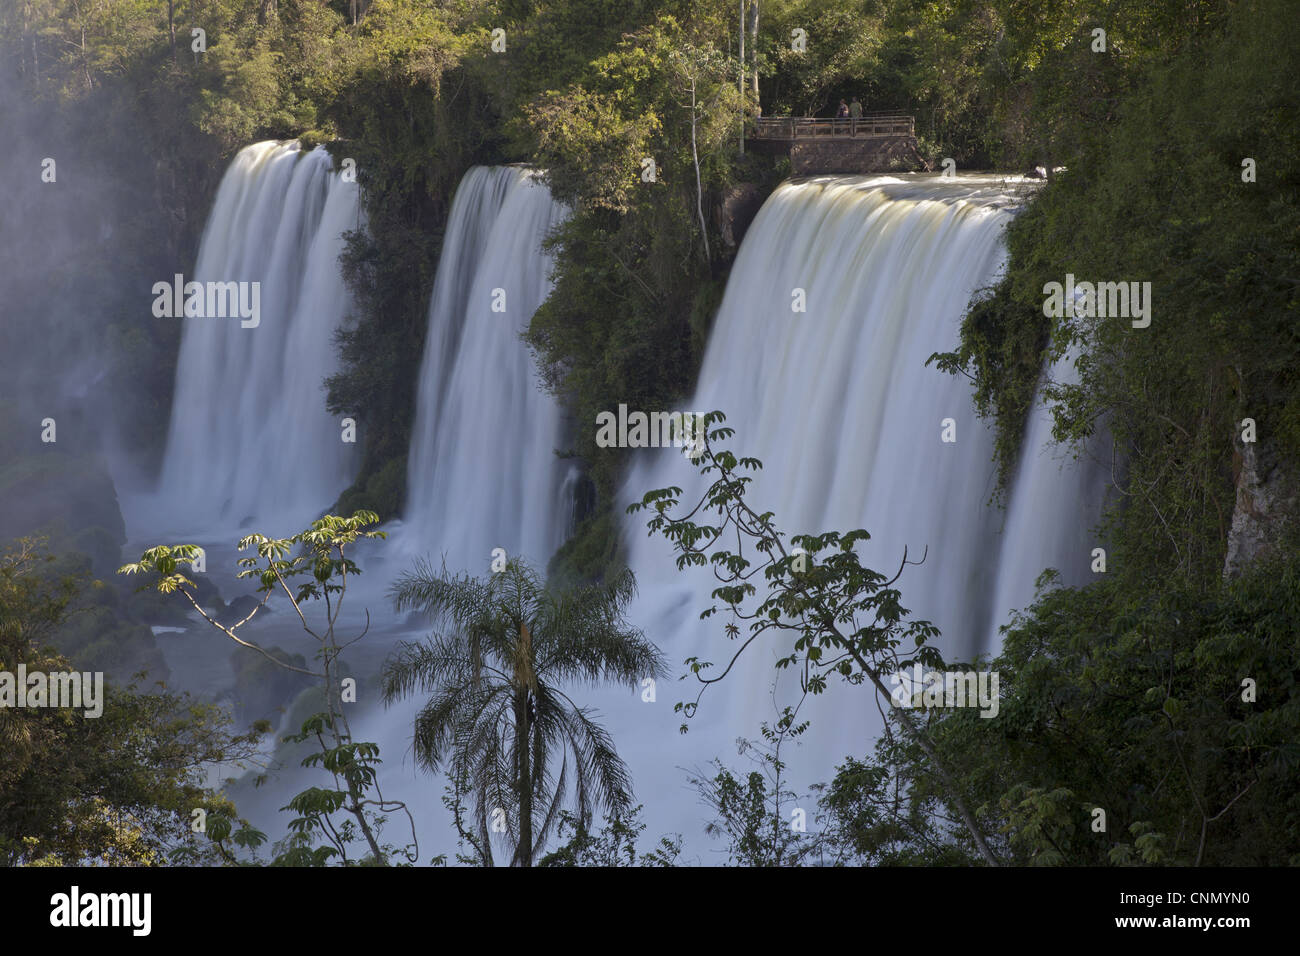 View of waterfall with viewing platform, Iguazu Falls, Iguazu N.P., Argentina Stock Photo